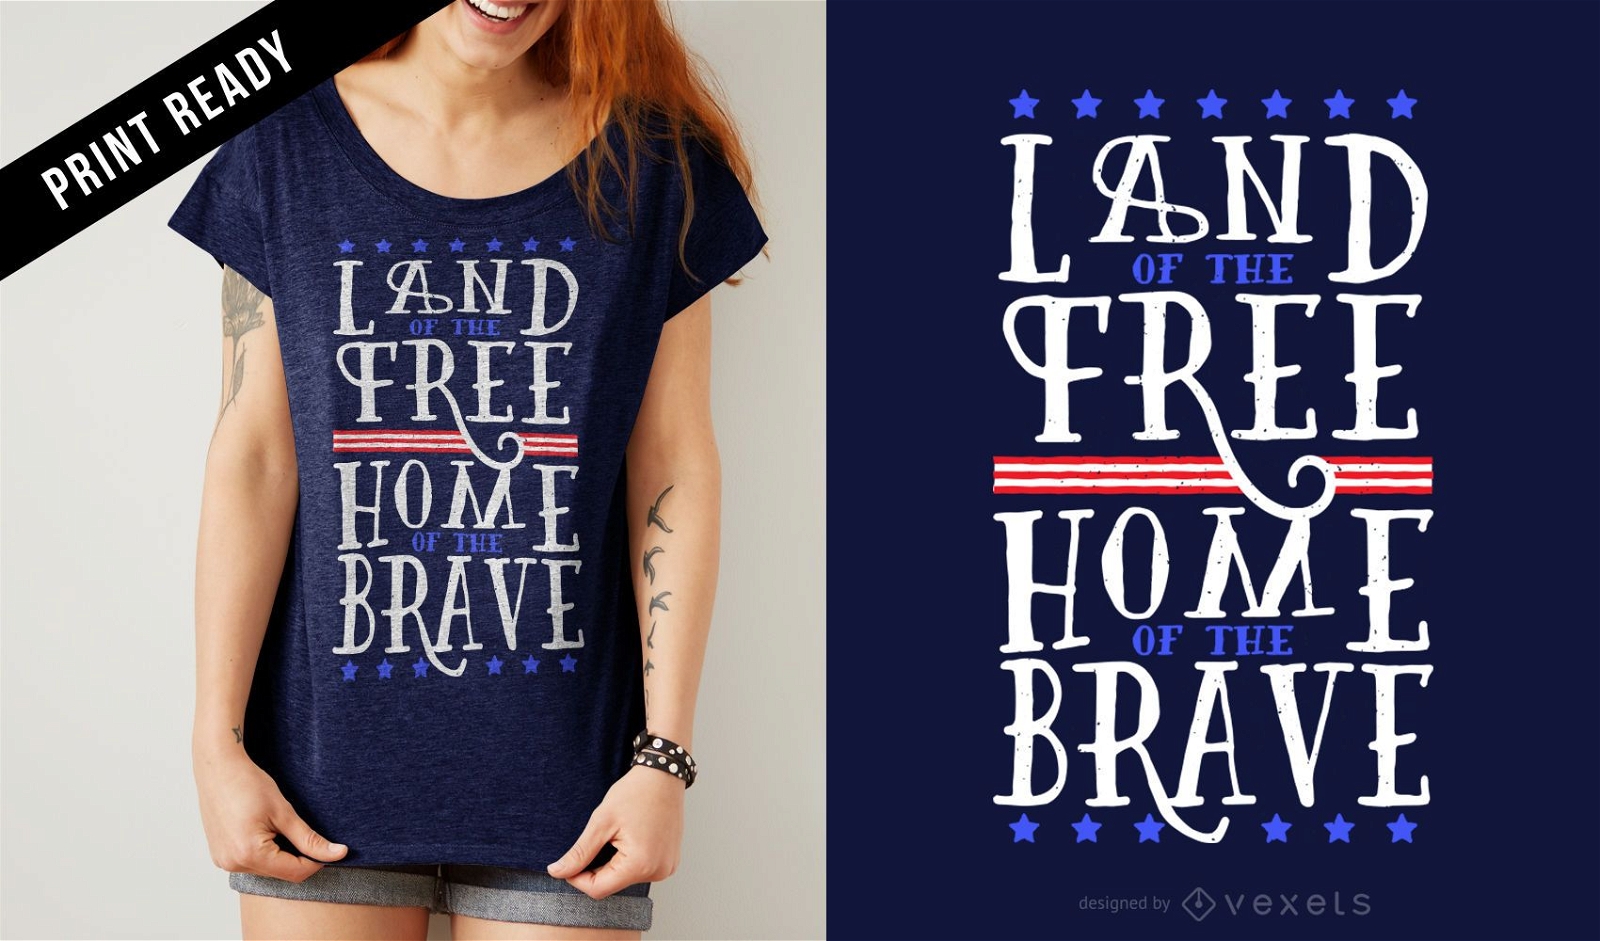 USA free and brave t-shirt design